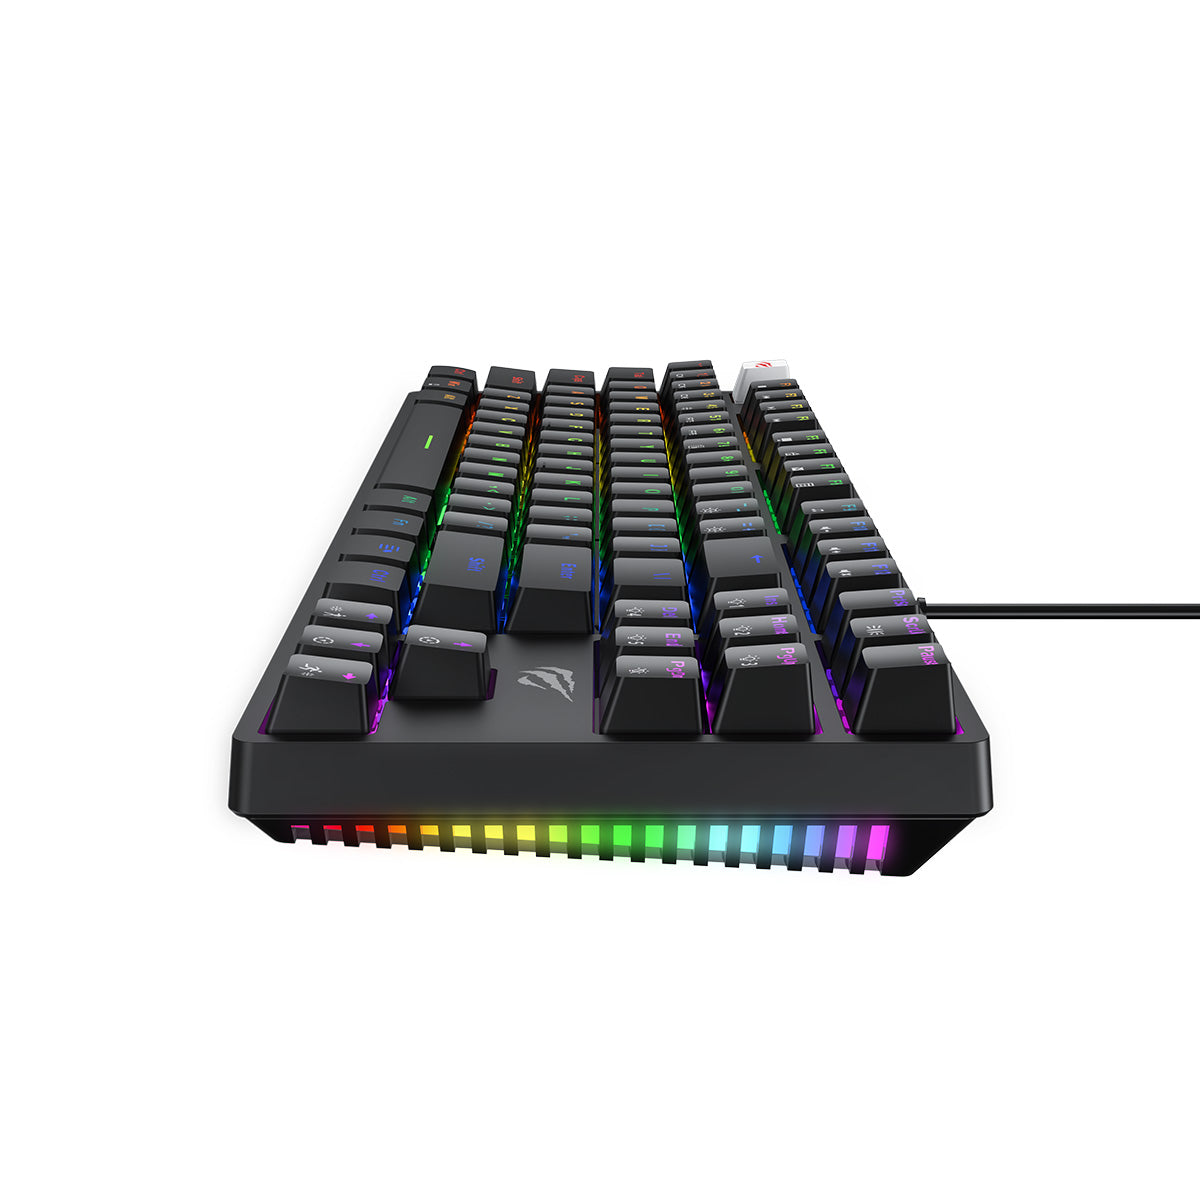 HAVIT KB890L RGB Backlit Mechanical Gaming Keyboard